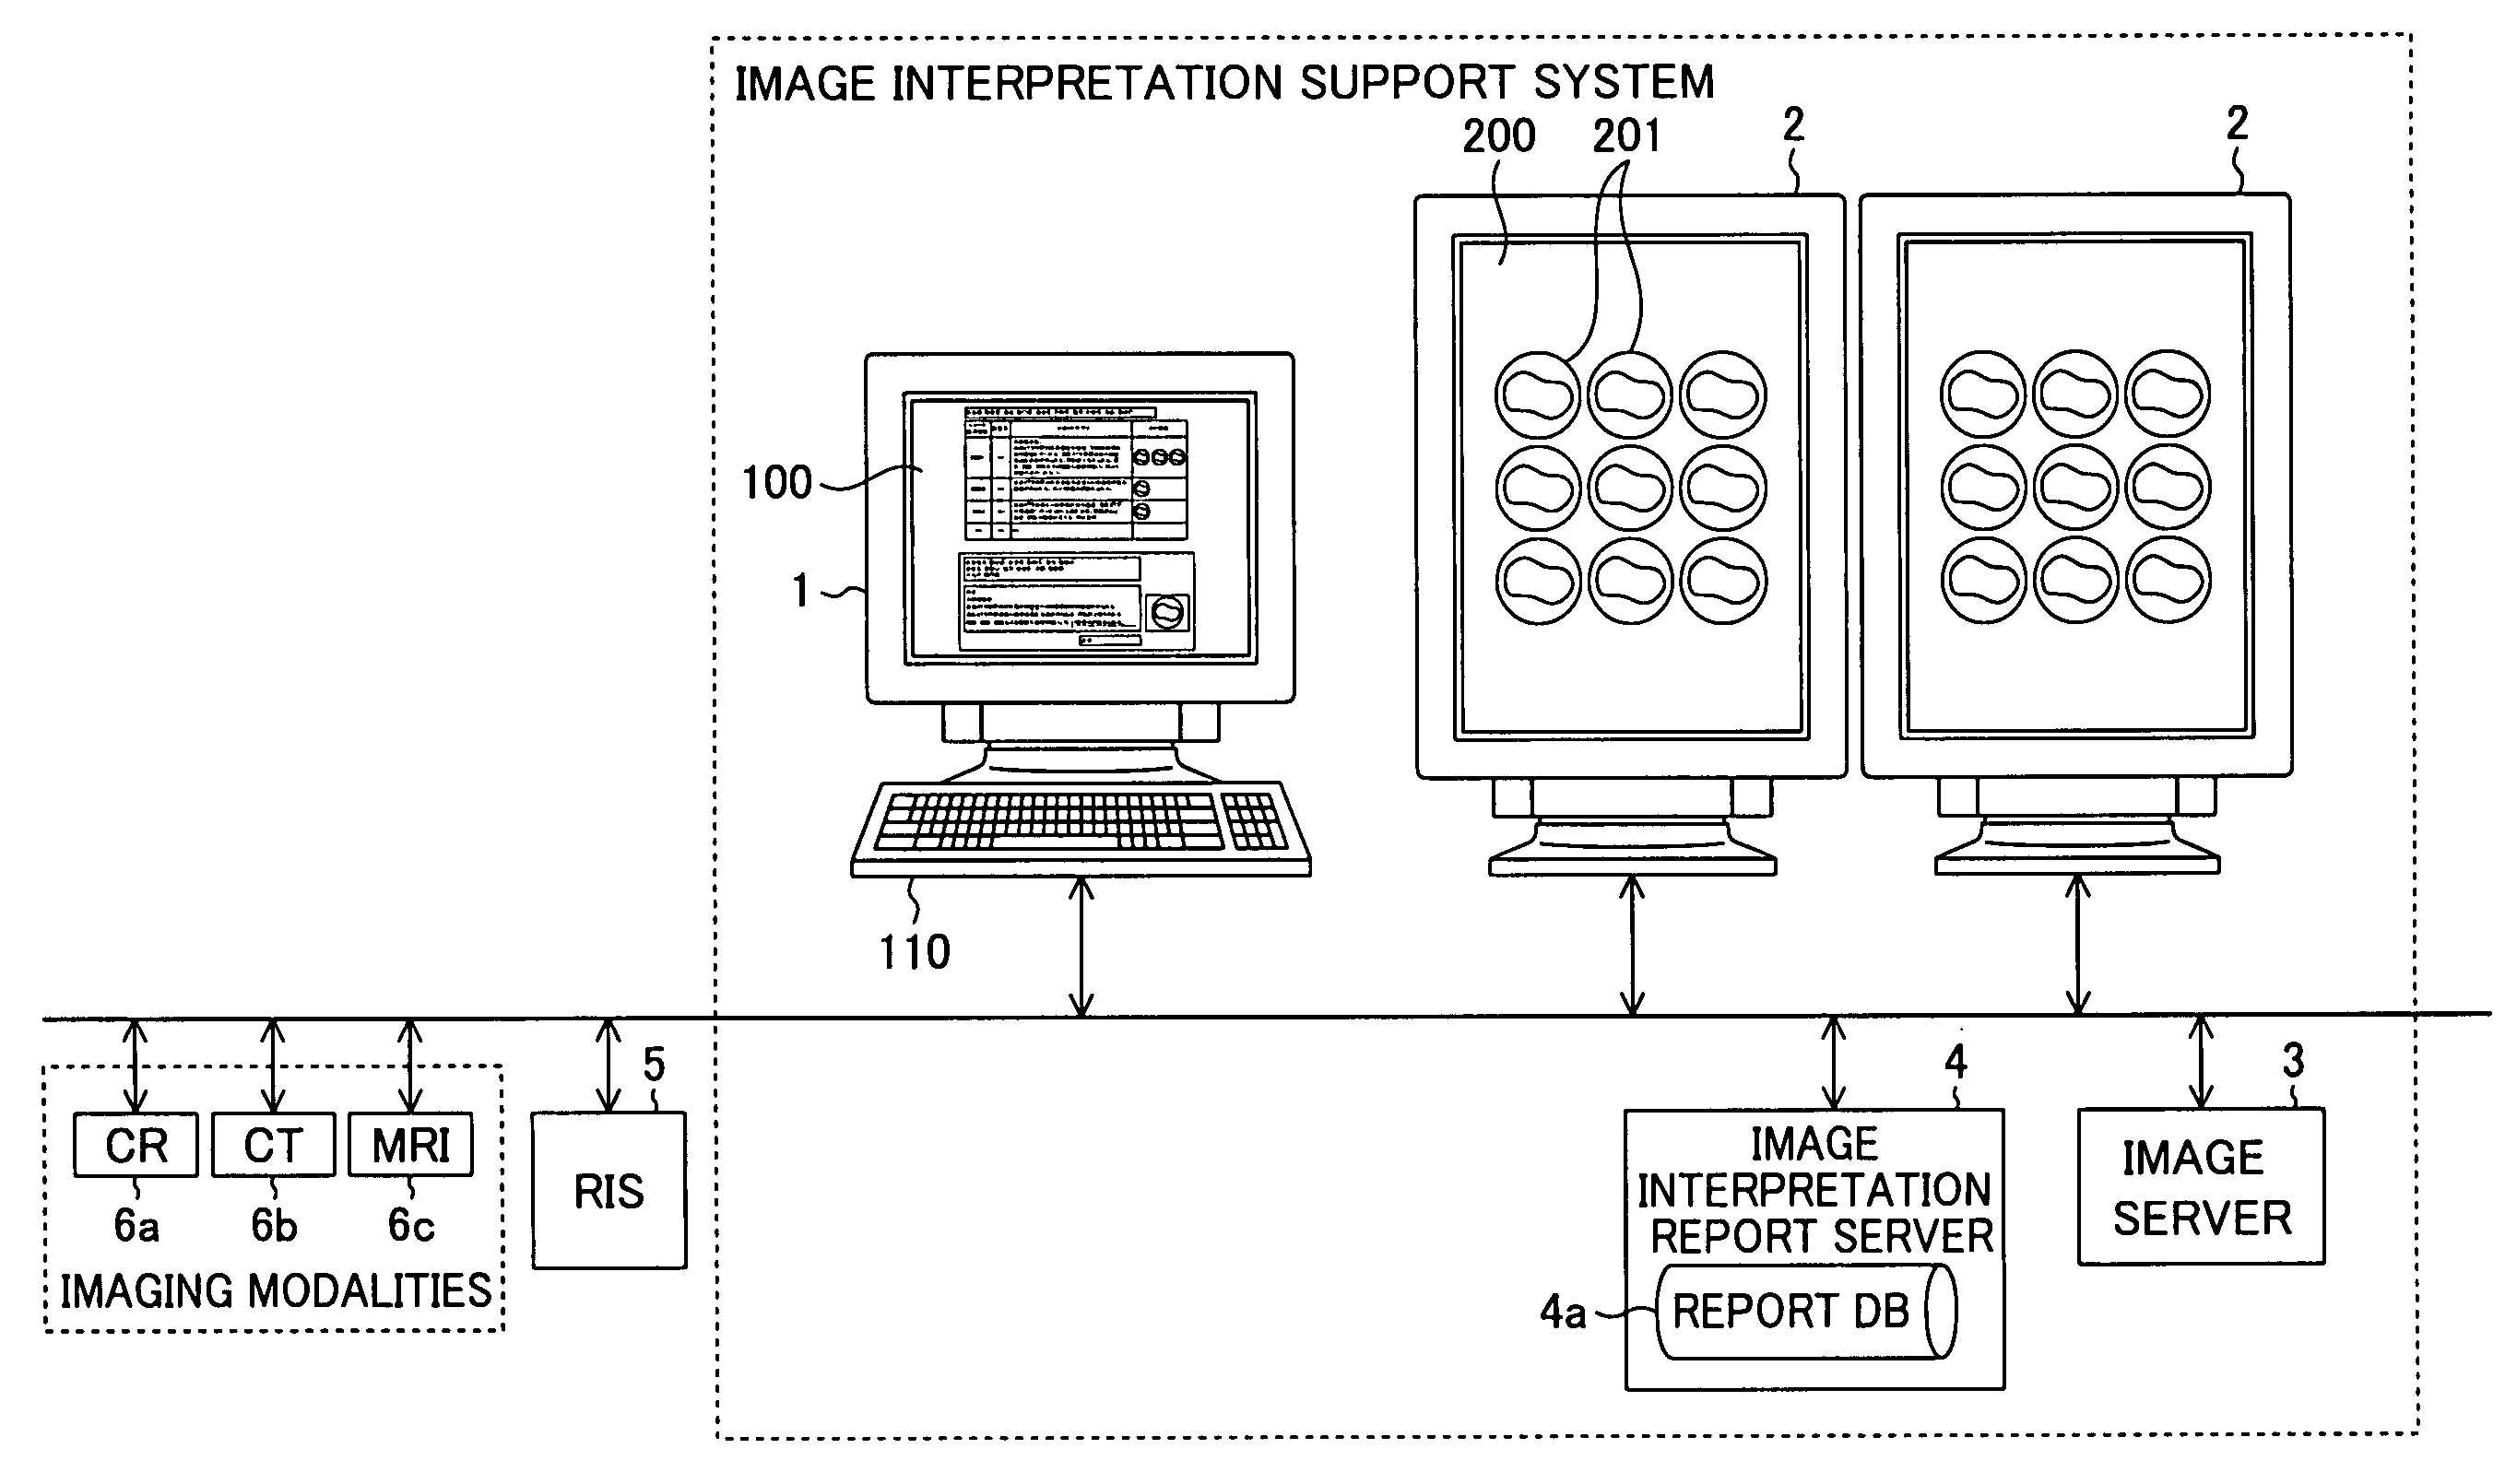 Image interpretation support system